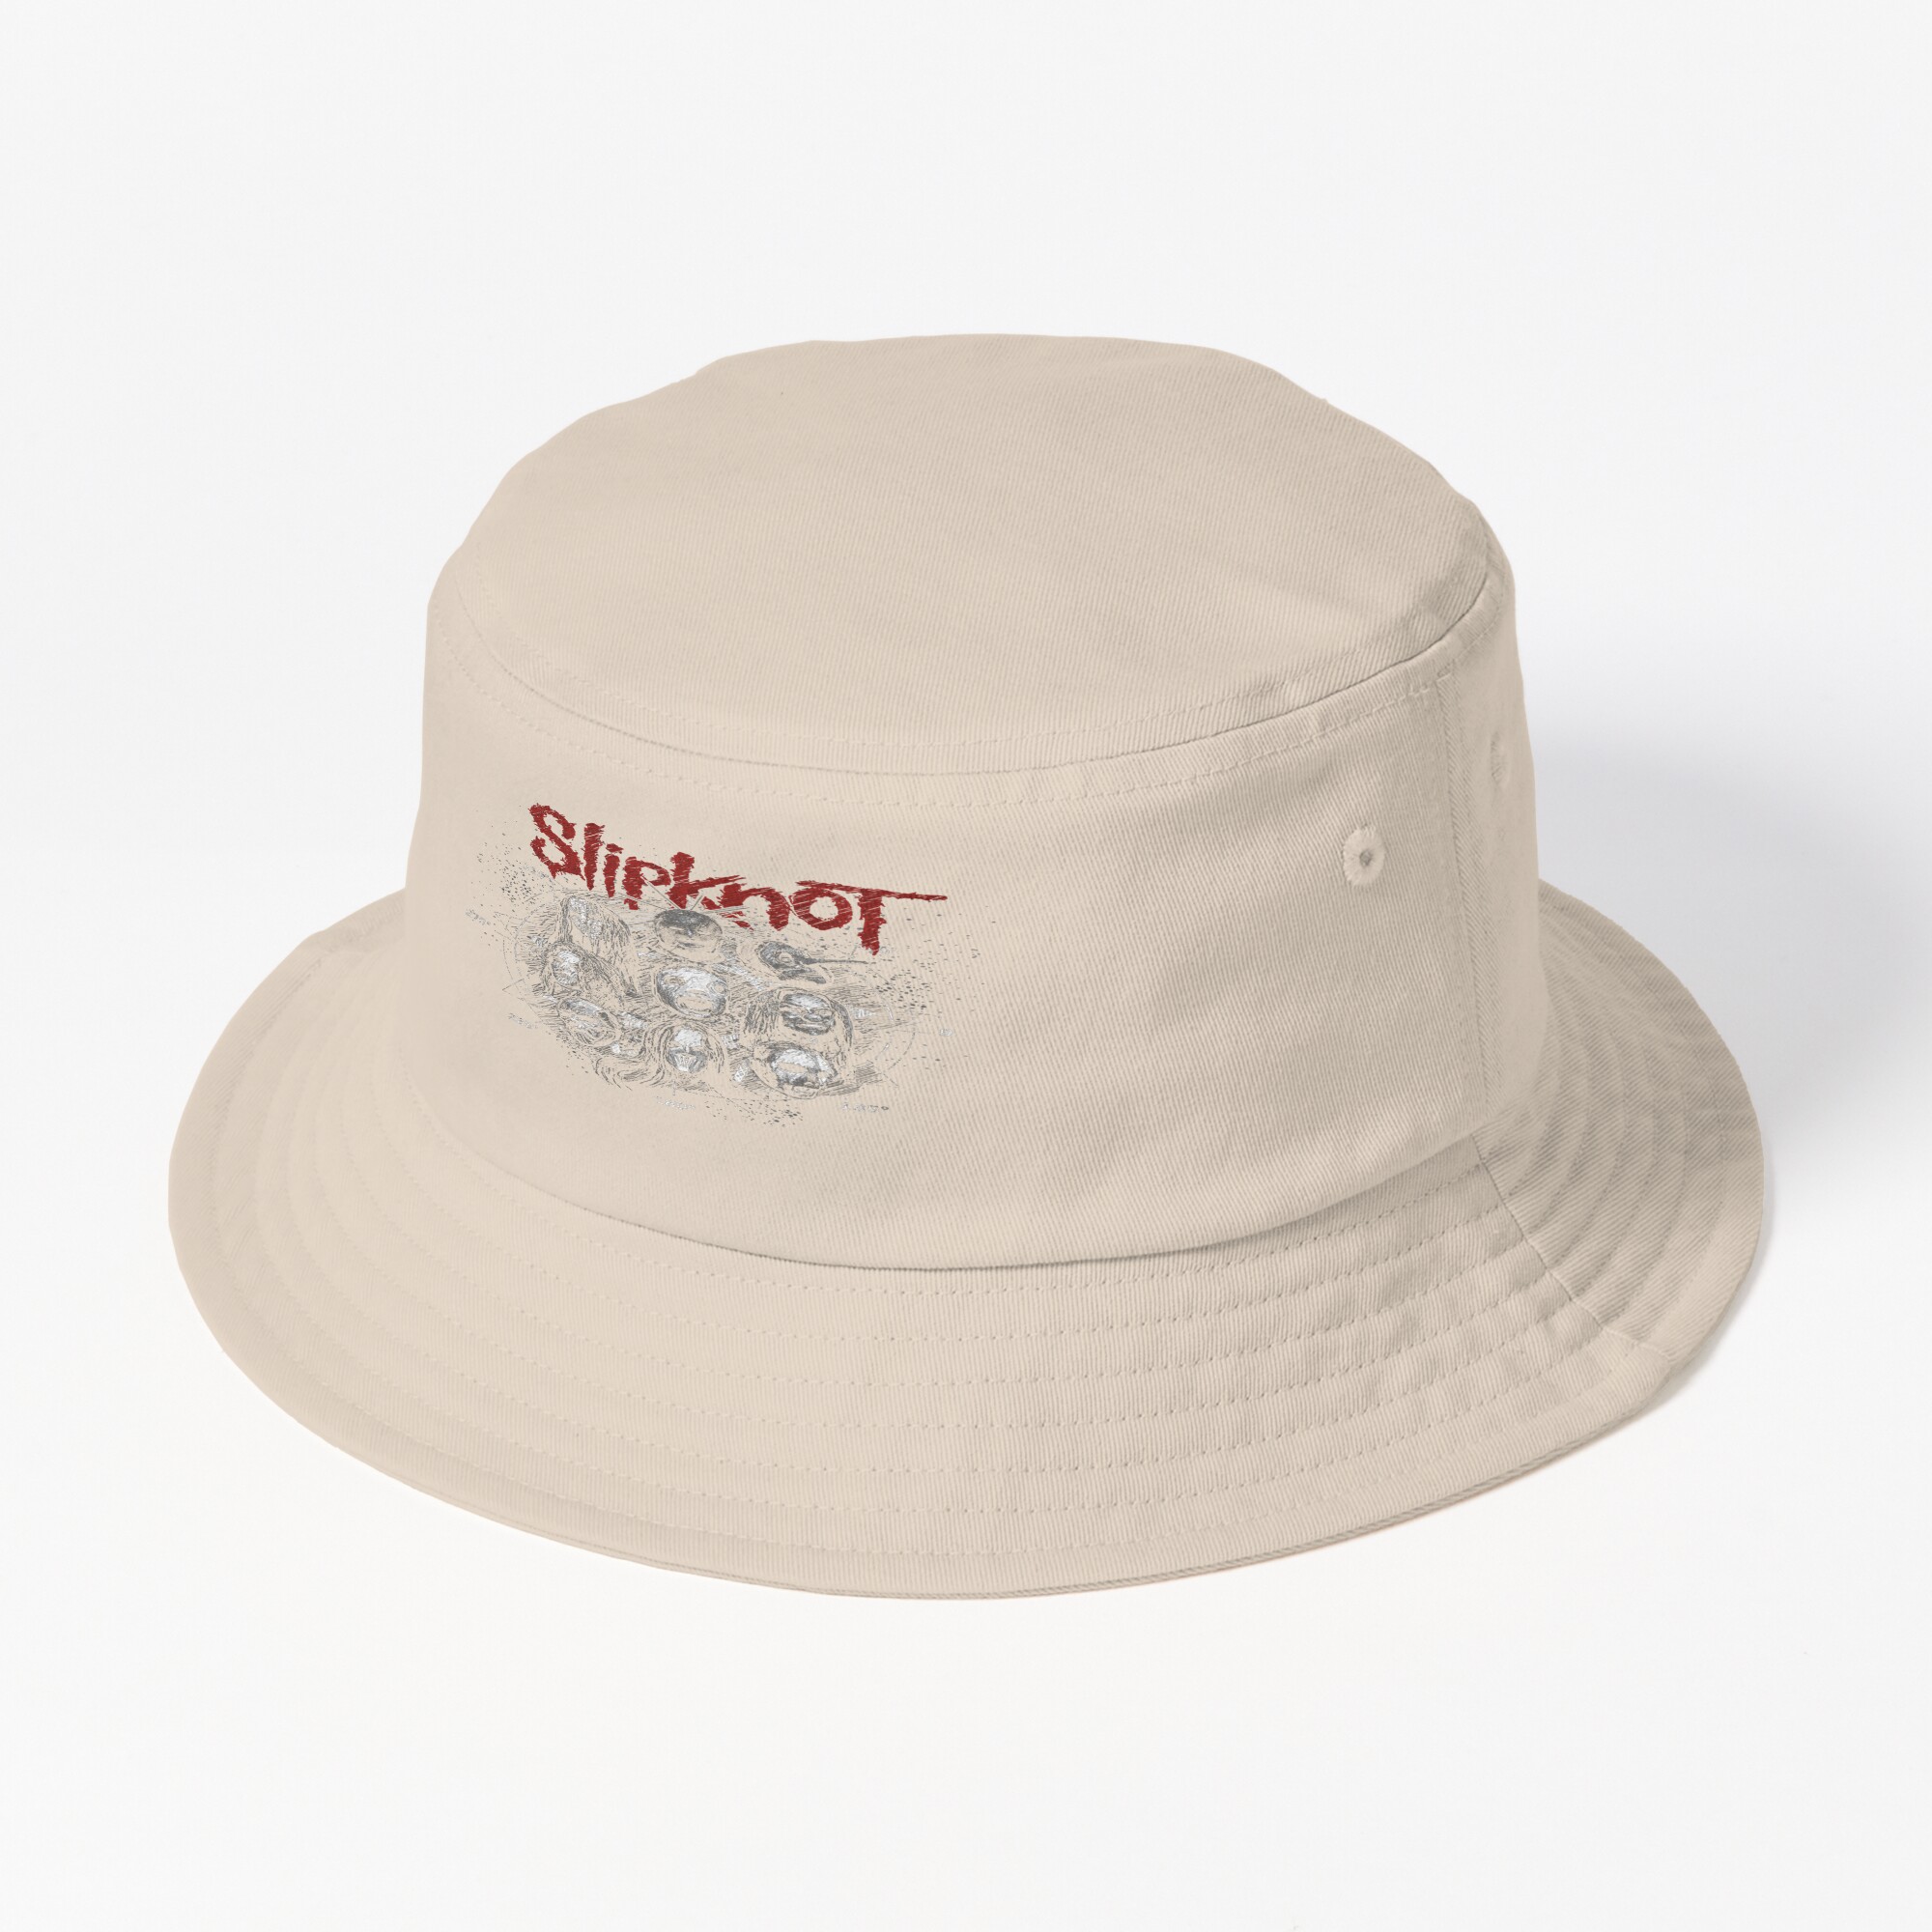 ssrcobucket hatproducte5d6c5f62bbf65eeprimarysquare2000x2000 bgf8f8f8 9 - Slipknot Shop